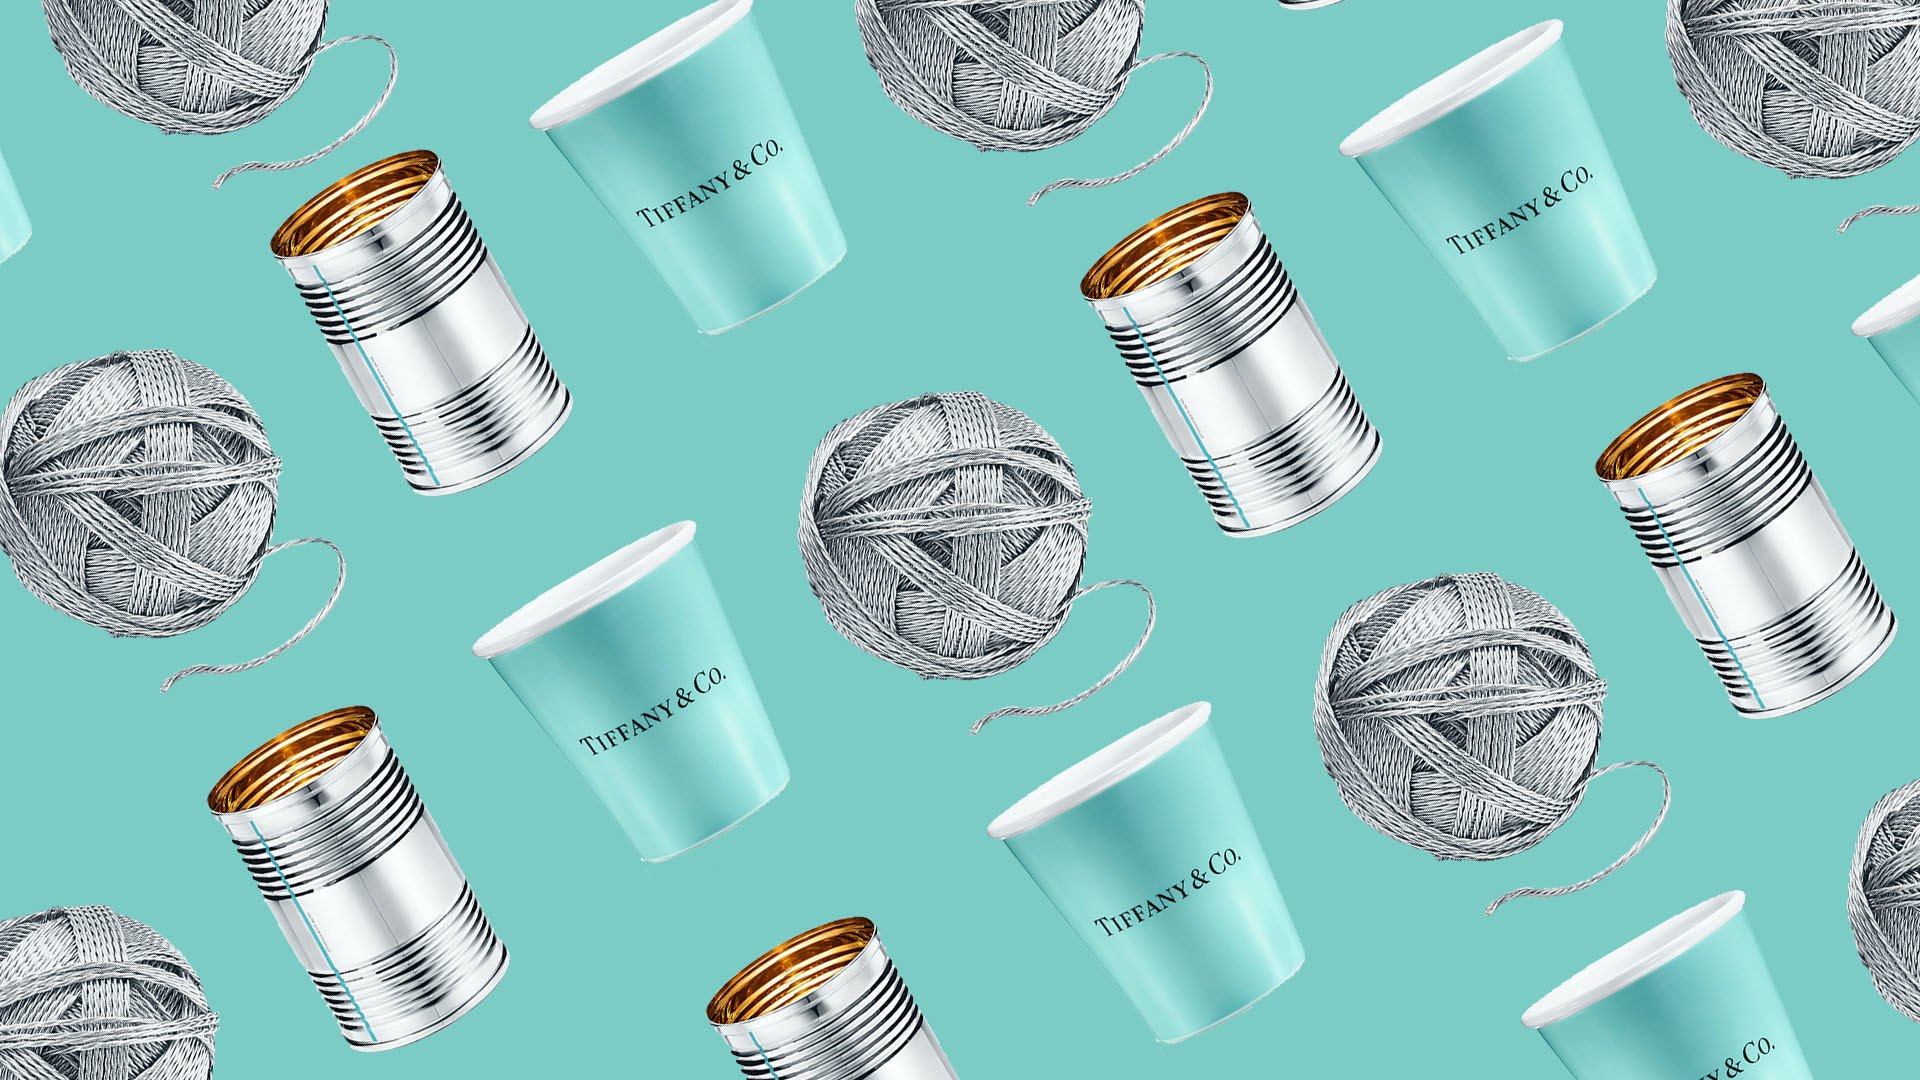 Tiffany & Co - Coffee Cup - HD Wallpaper 